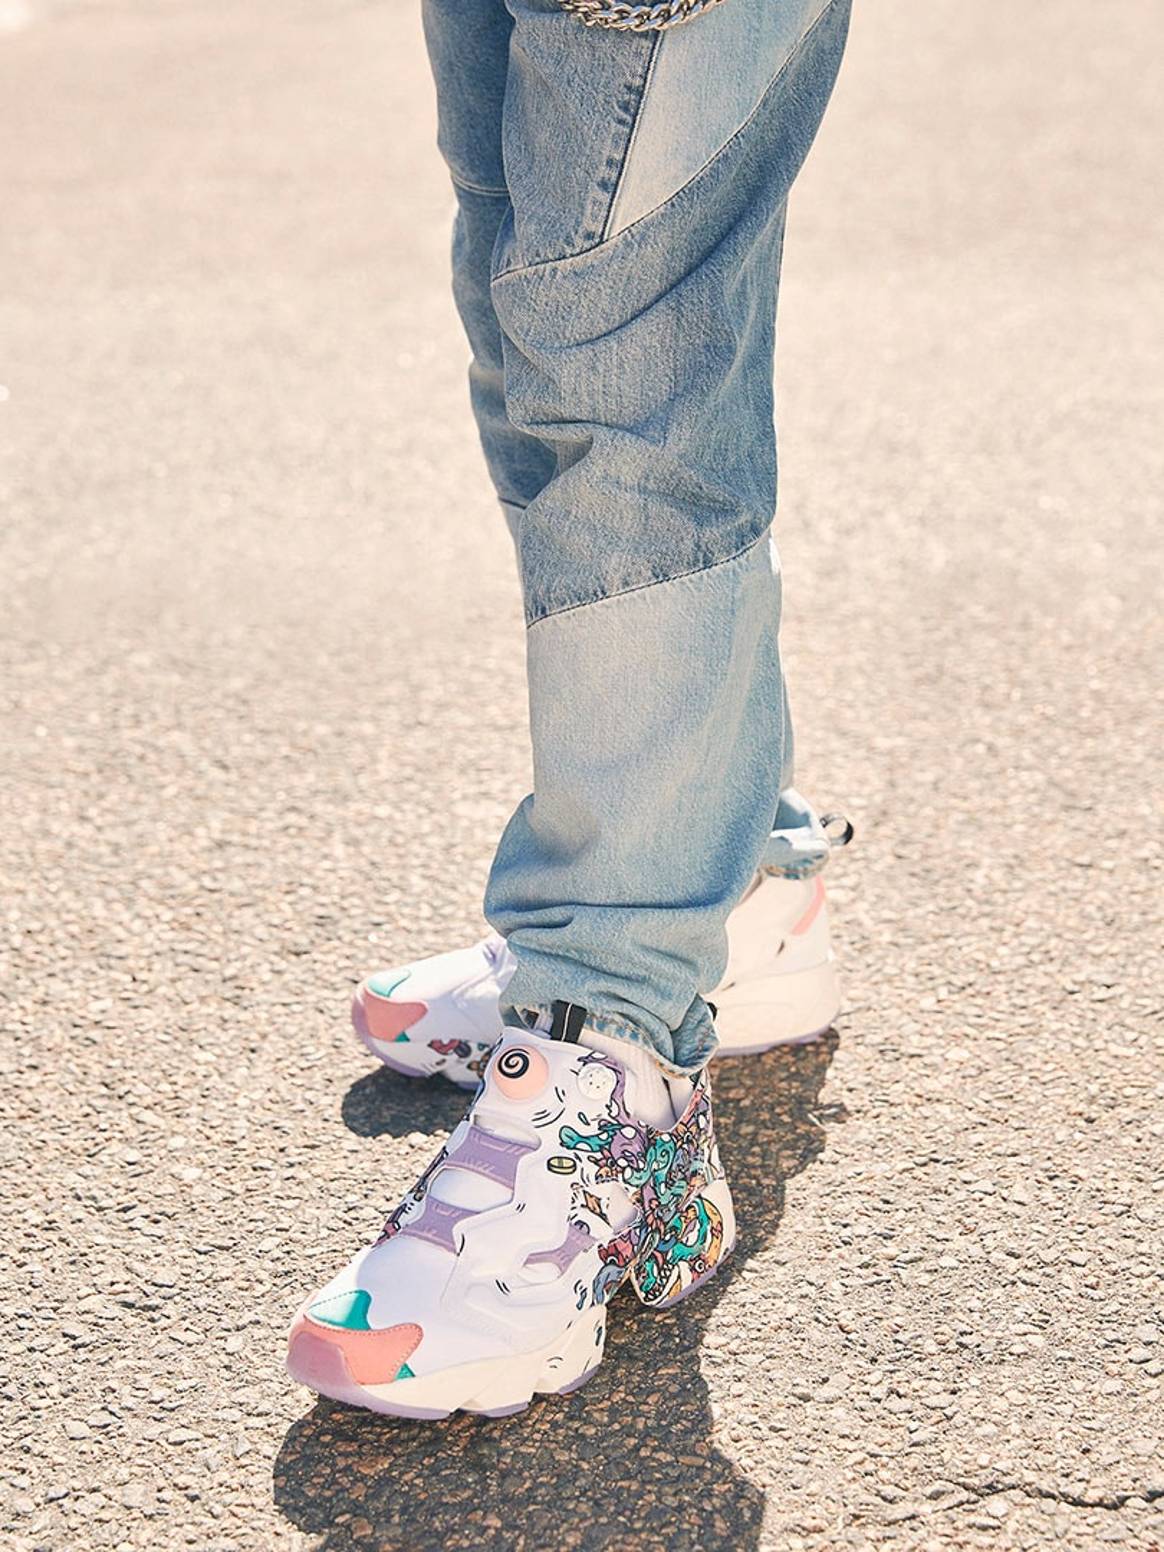 Reebok taps artist Distortedd for latest sneaker collab